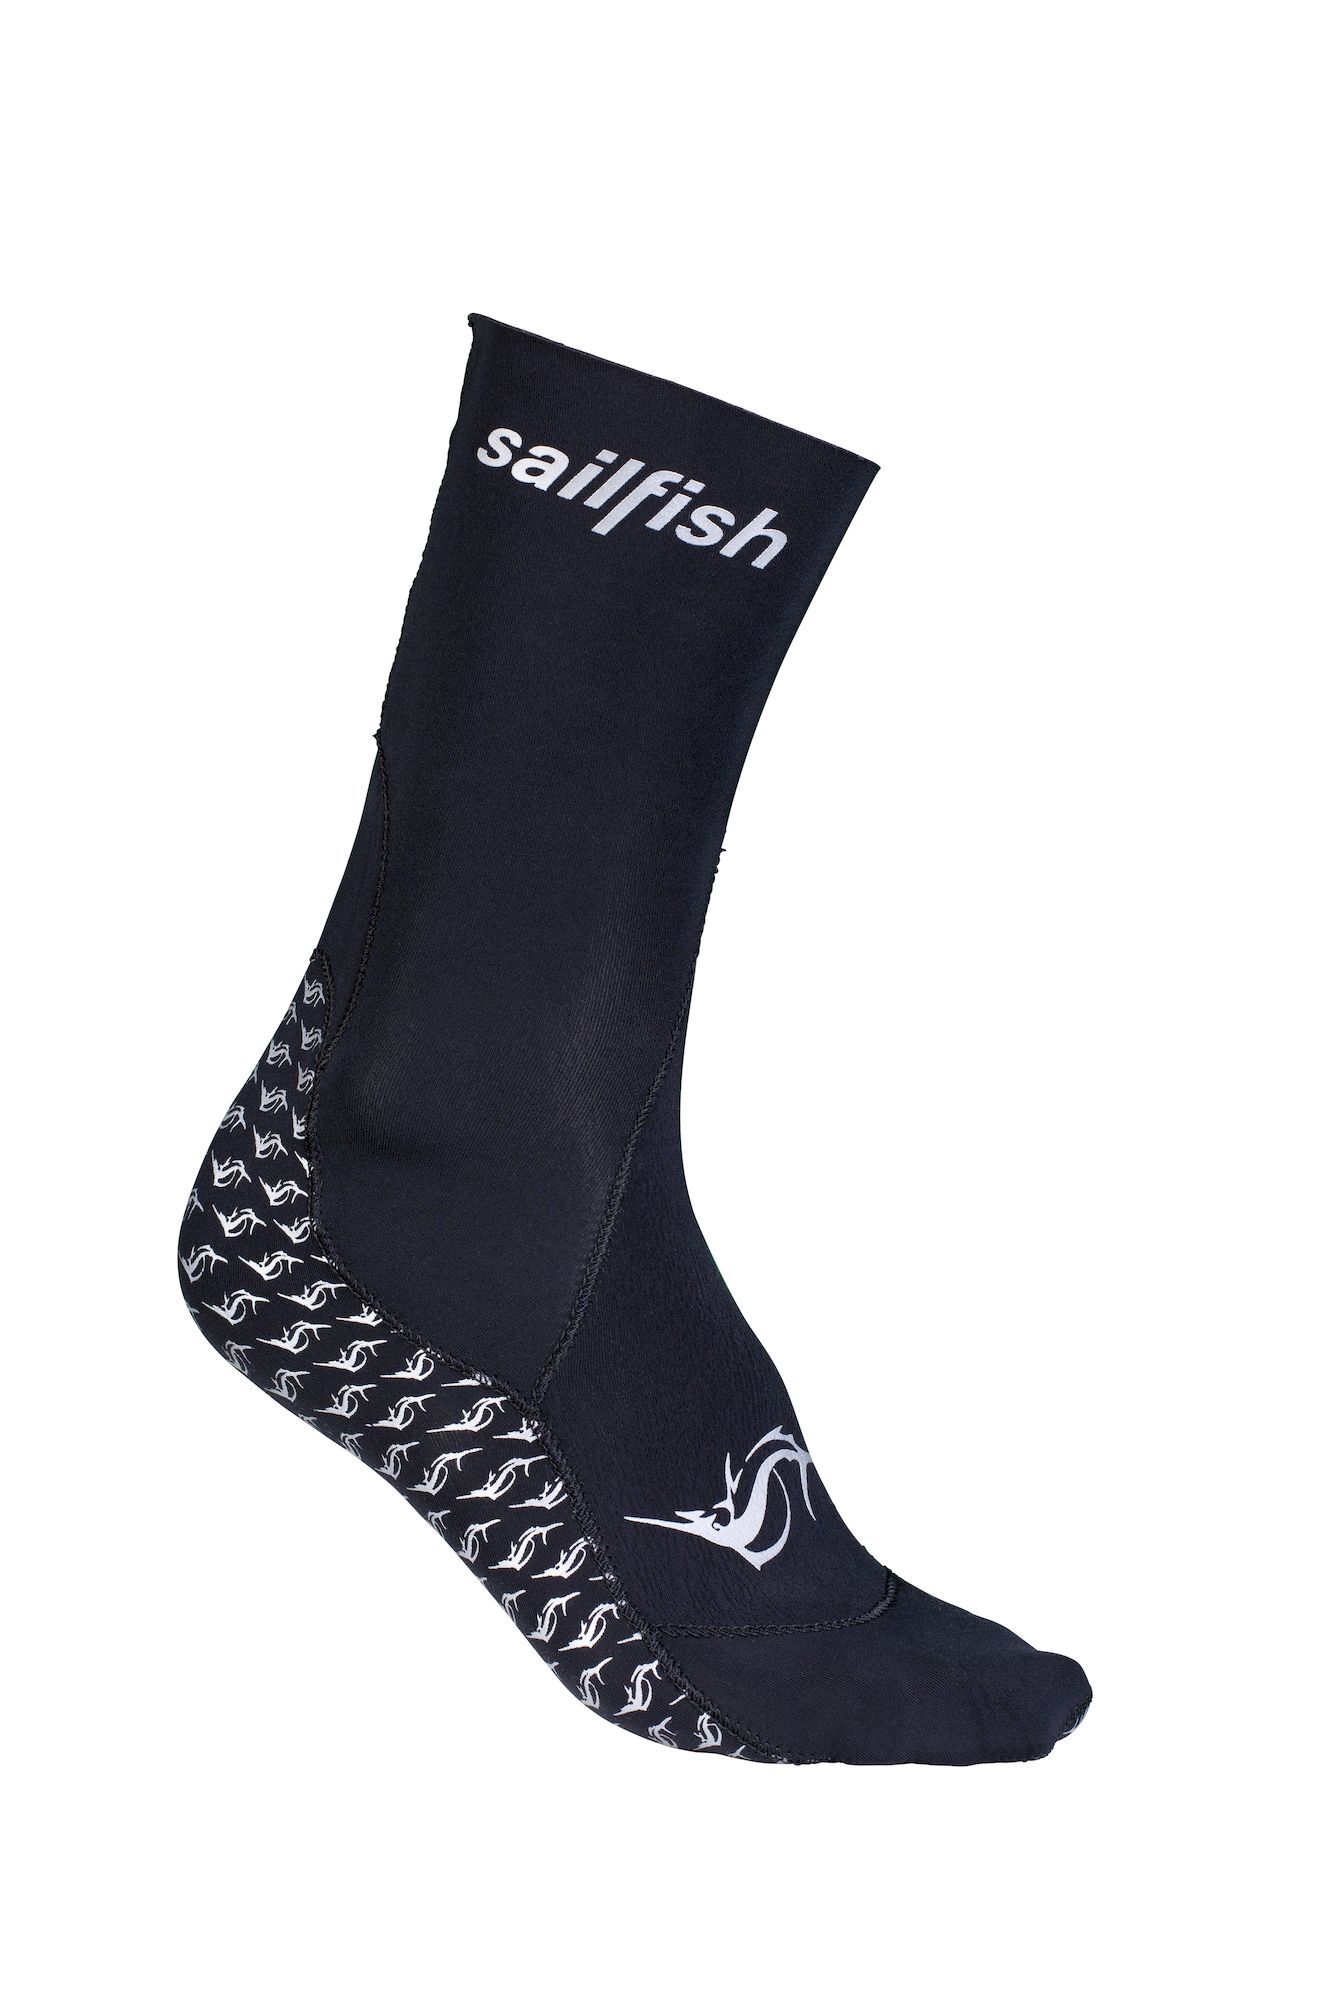 Sailfish Neoprene Socks - Neopreen schoenen | Hardloop